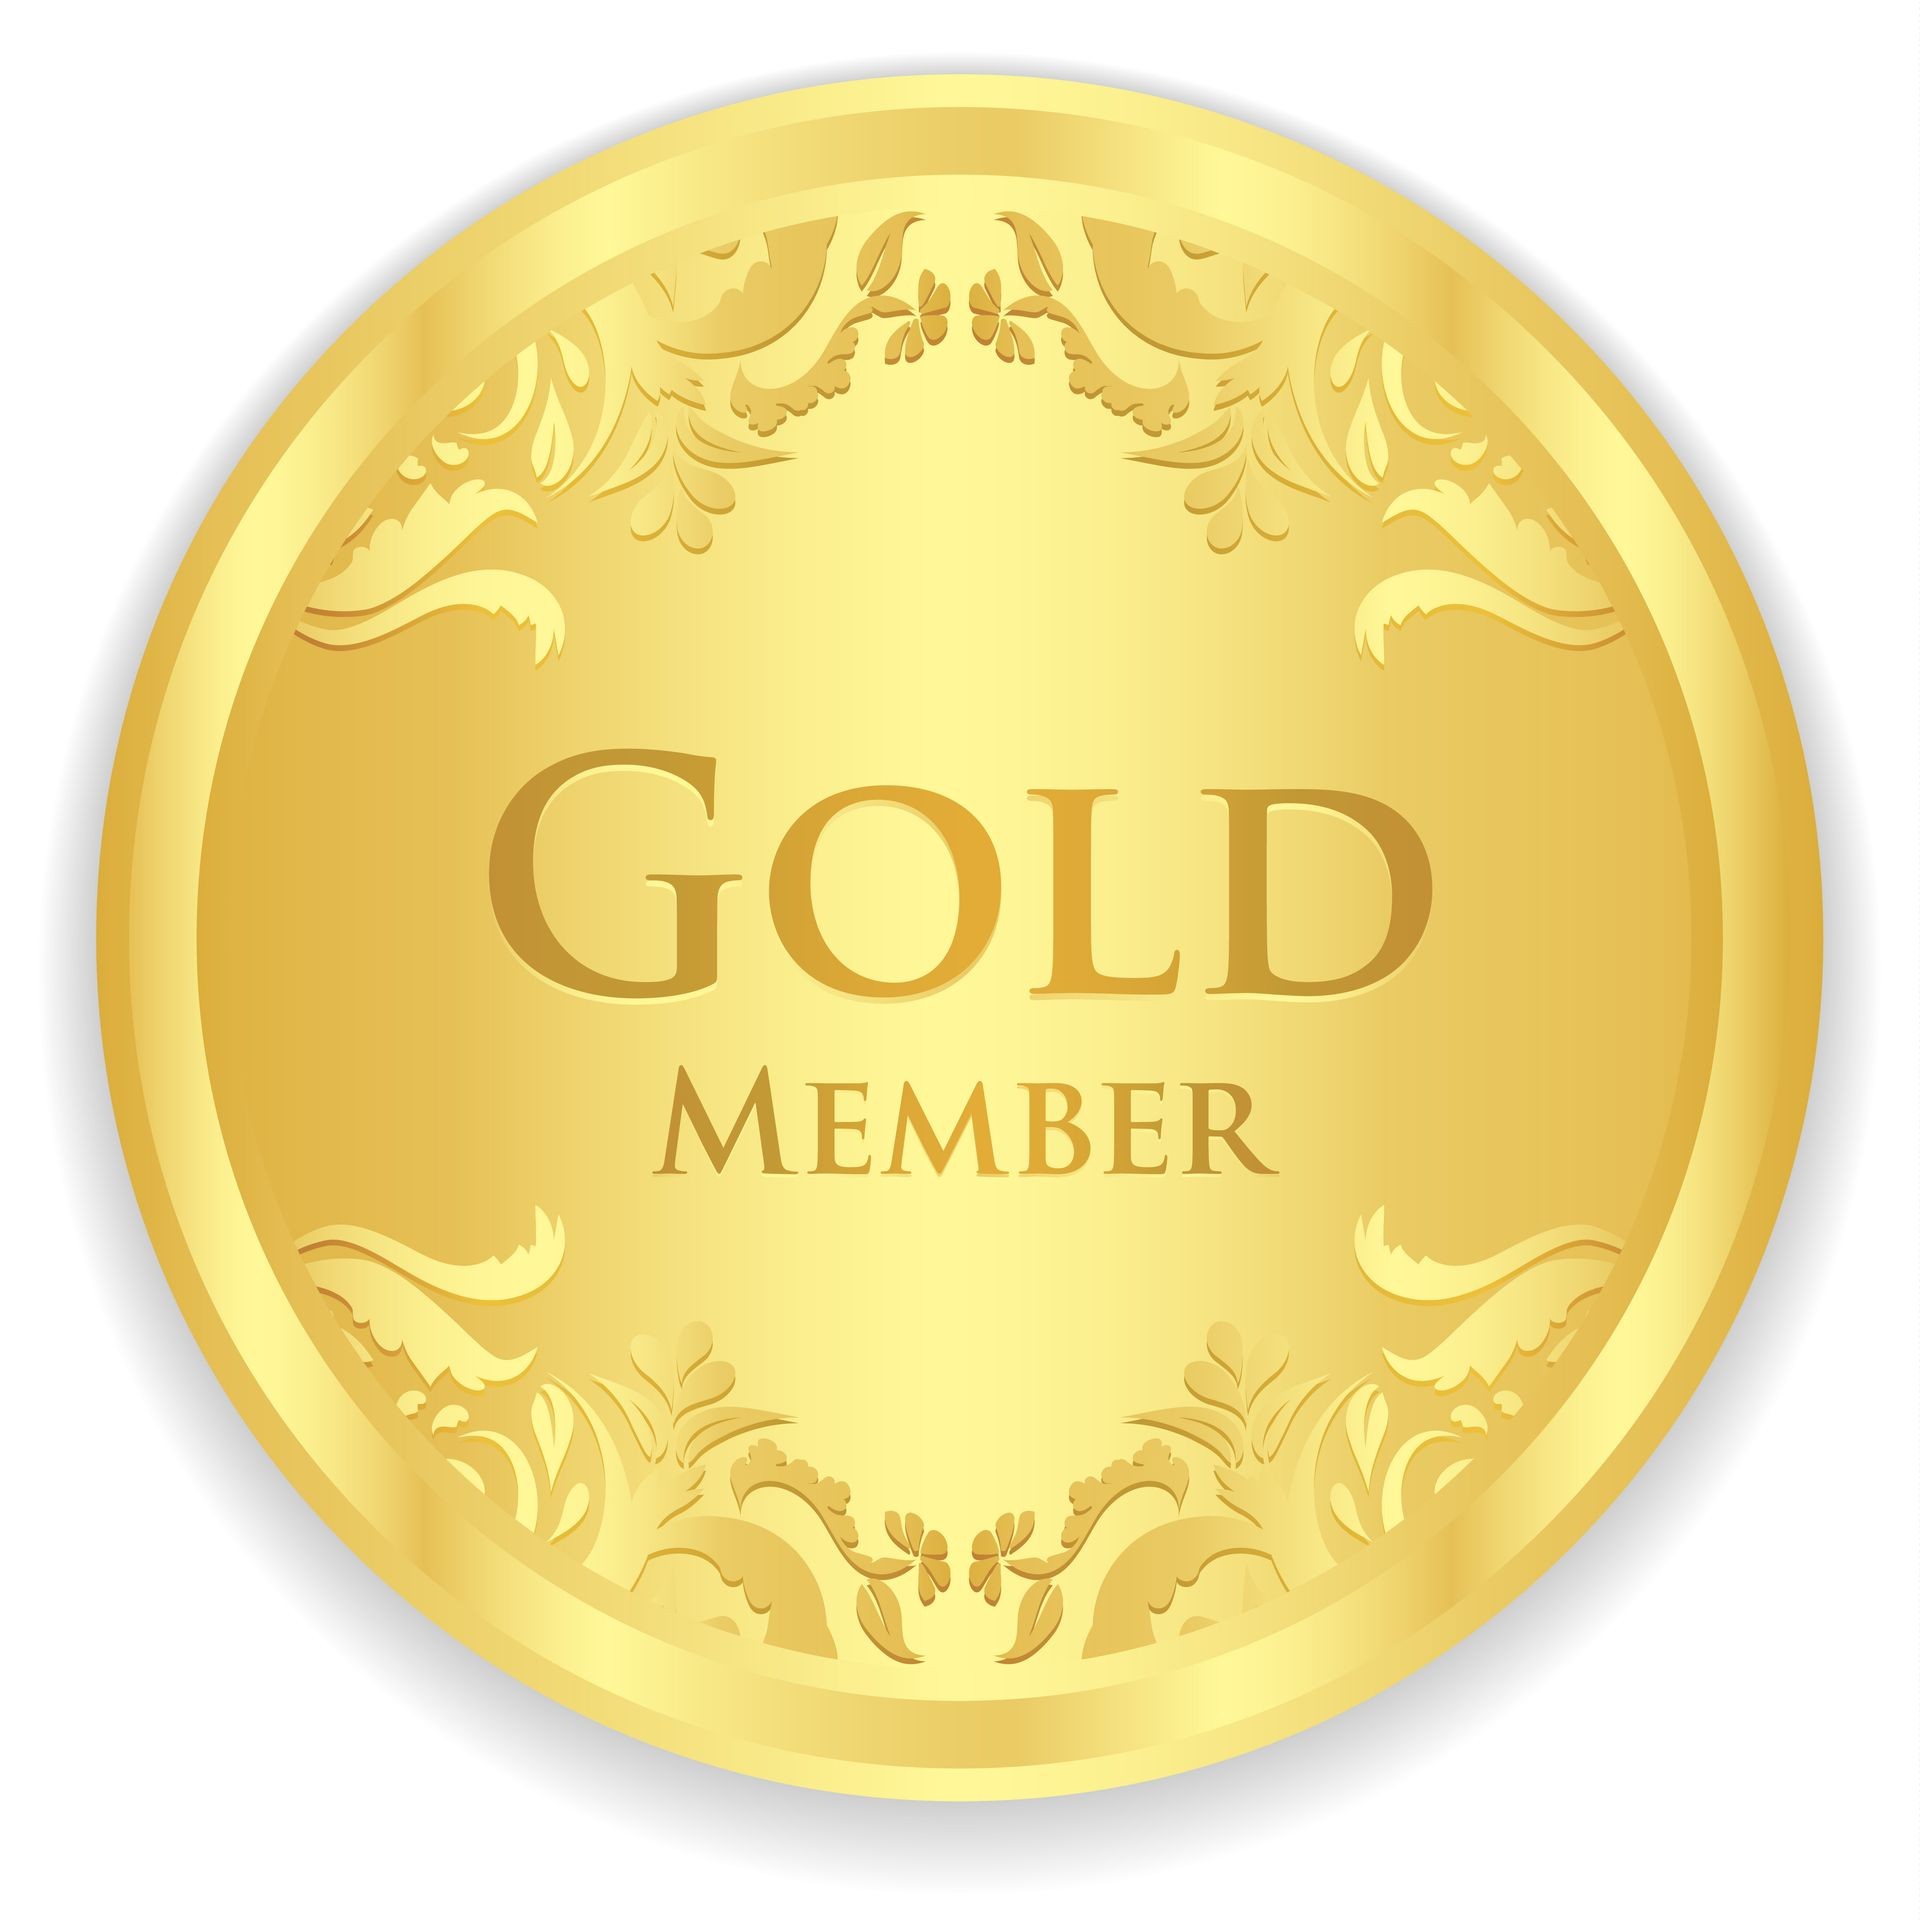 1-Year Gold Membership